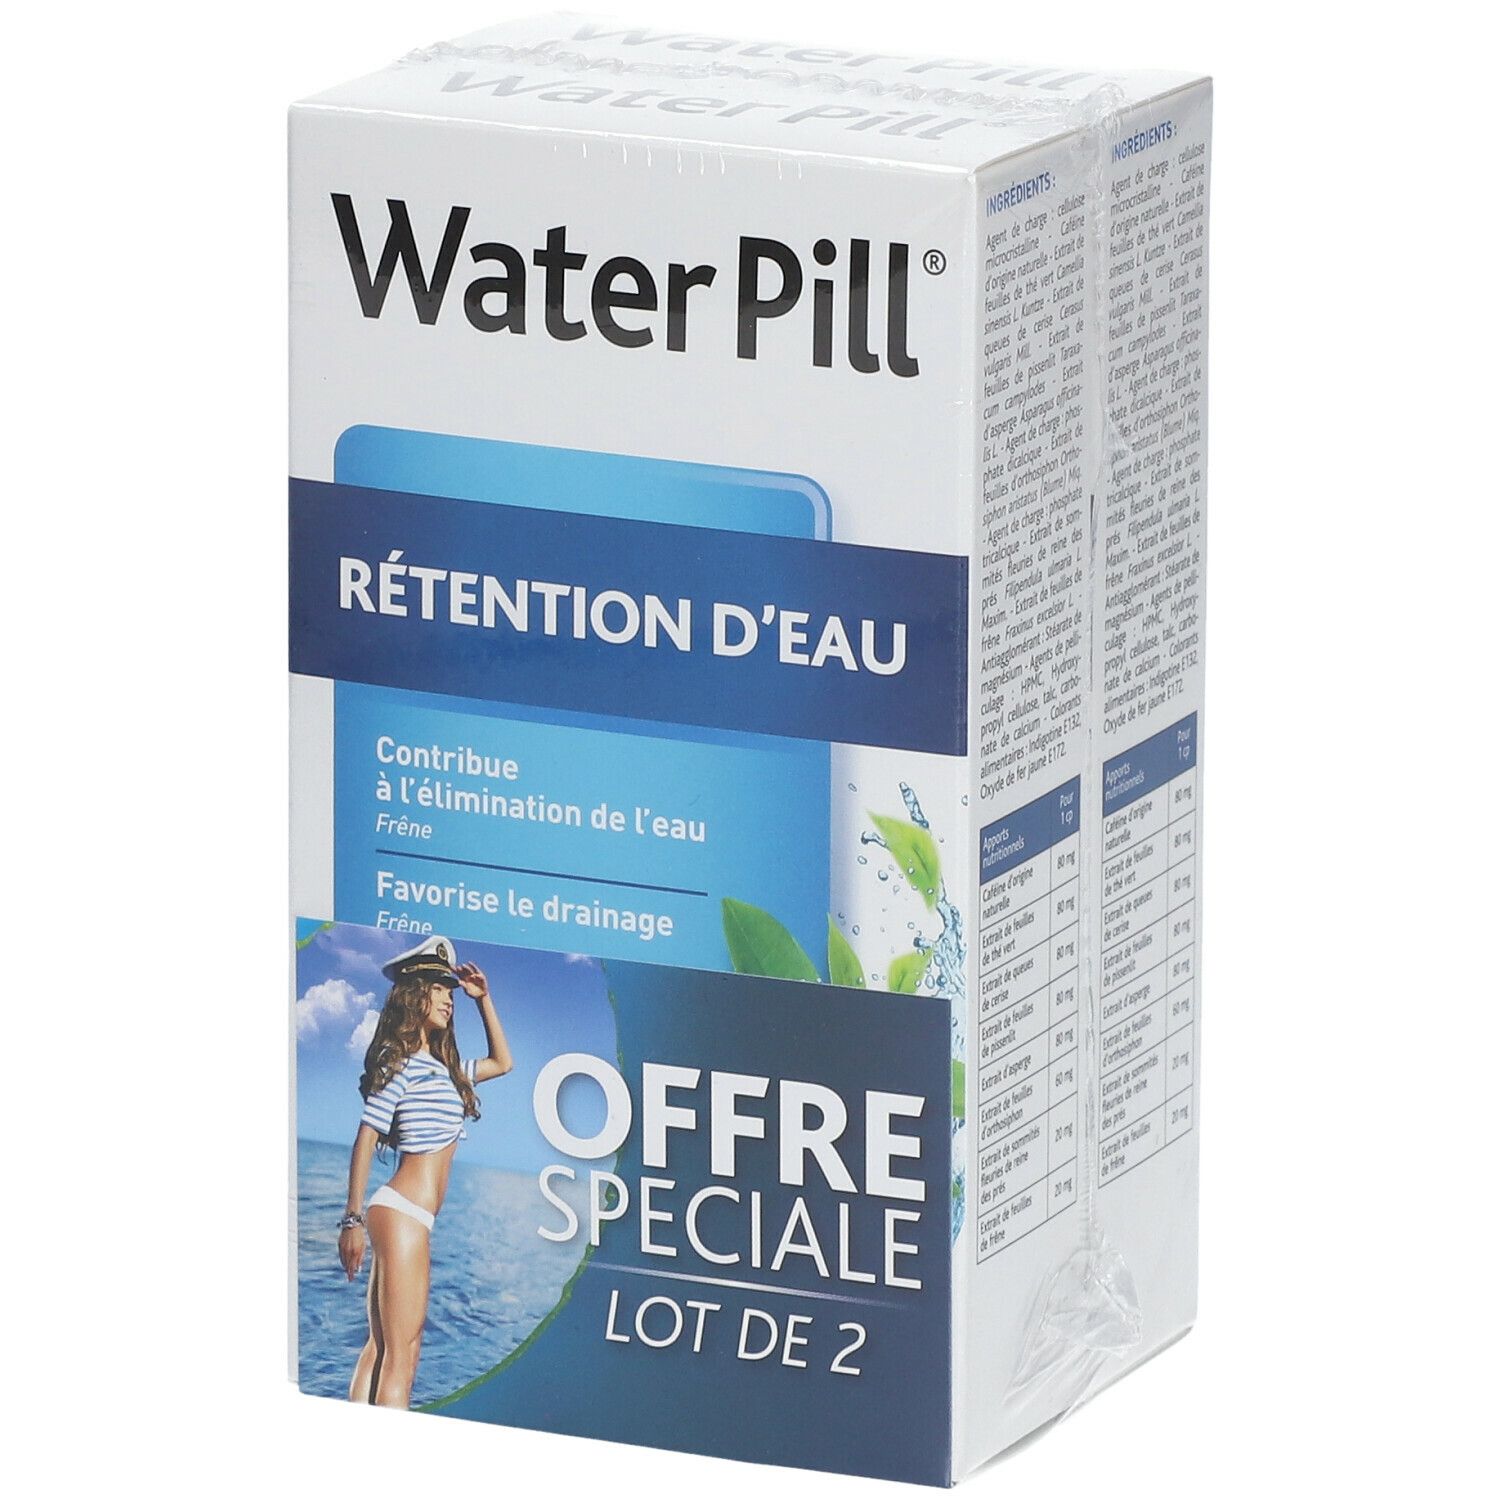 Nutreov Physcience Waterpill® Rétention d'eau